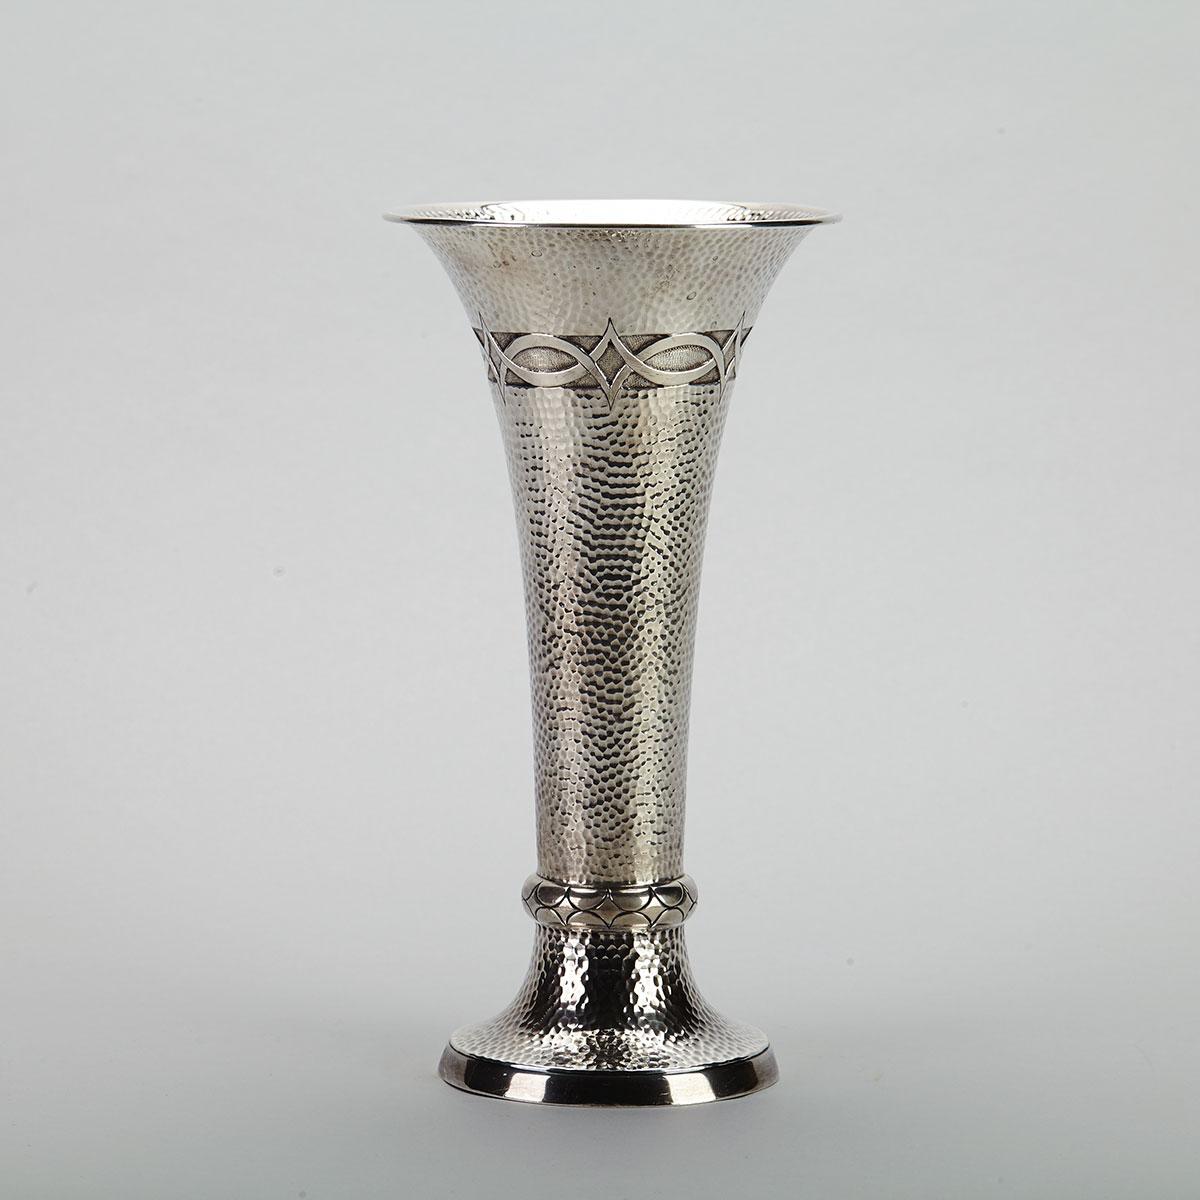 English Arts & Crafts Silver Trumpet Vase, Docker & Burn Ltd., Birmingham, 1923